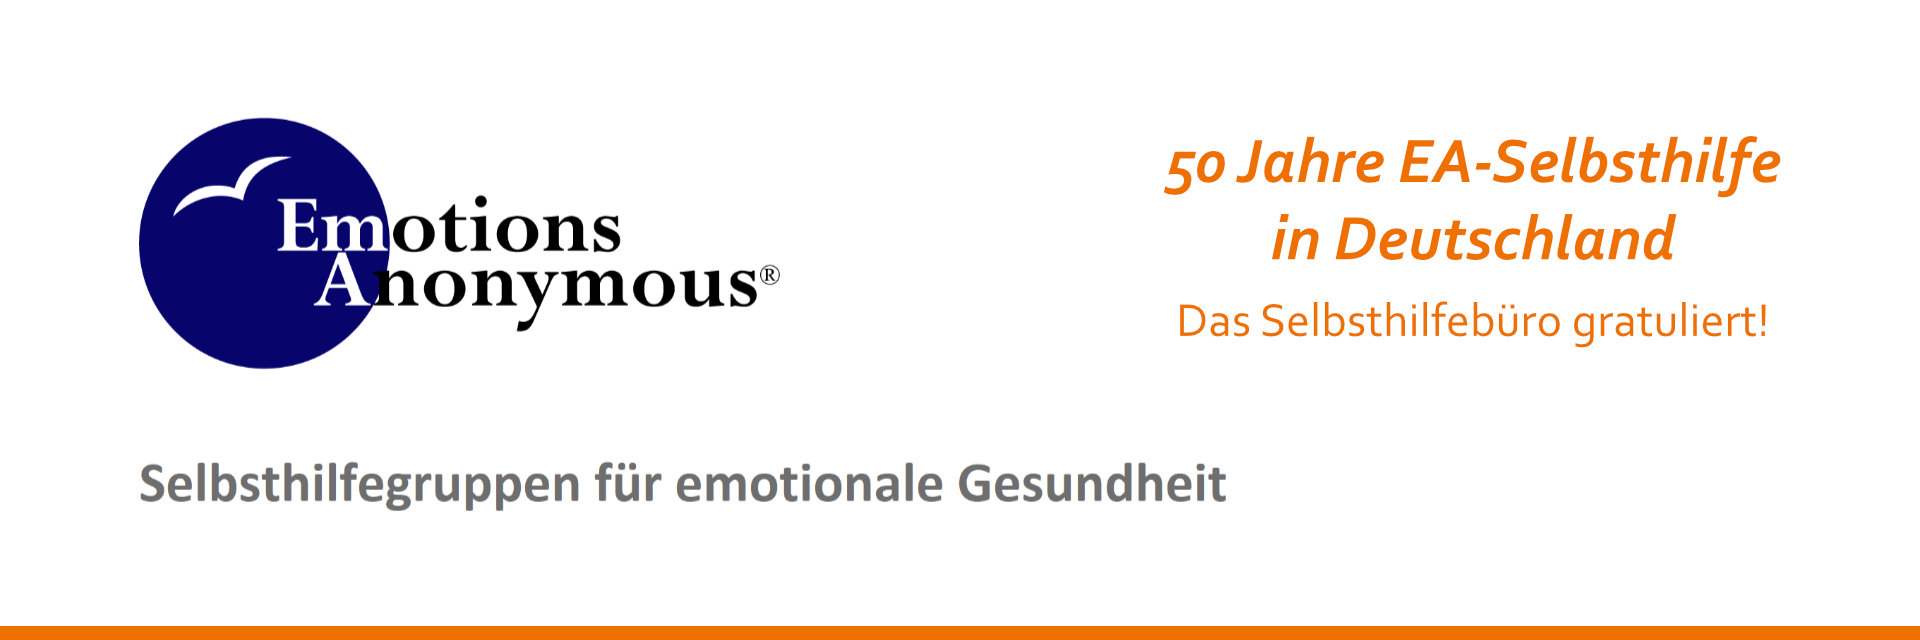 Logo: Emotions Anonymous. Text: 50 Jahre EA-Selbsthilfe in Deutschland. Das Selbsthilfebüro gratuliert!